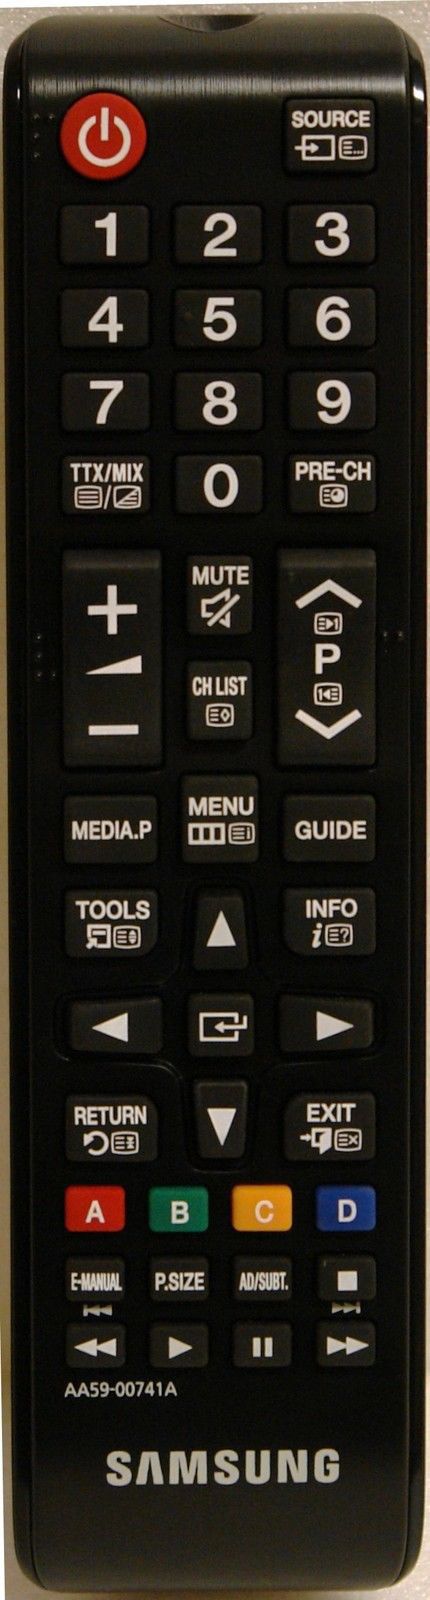 Samsung Remote Control TM1240 pults